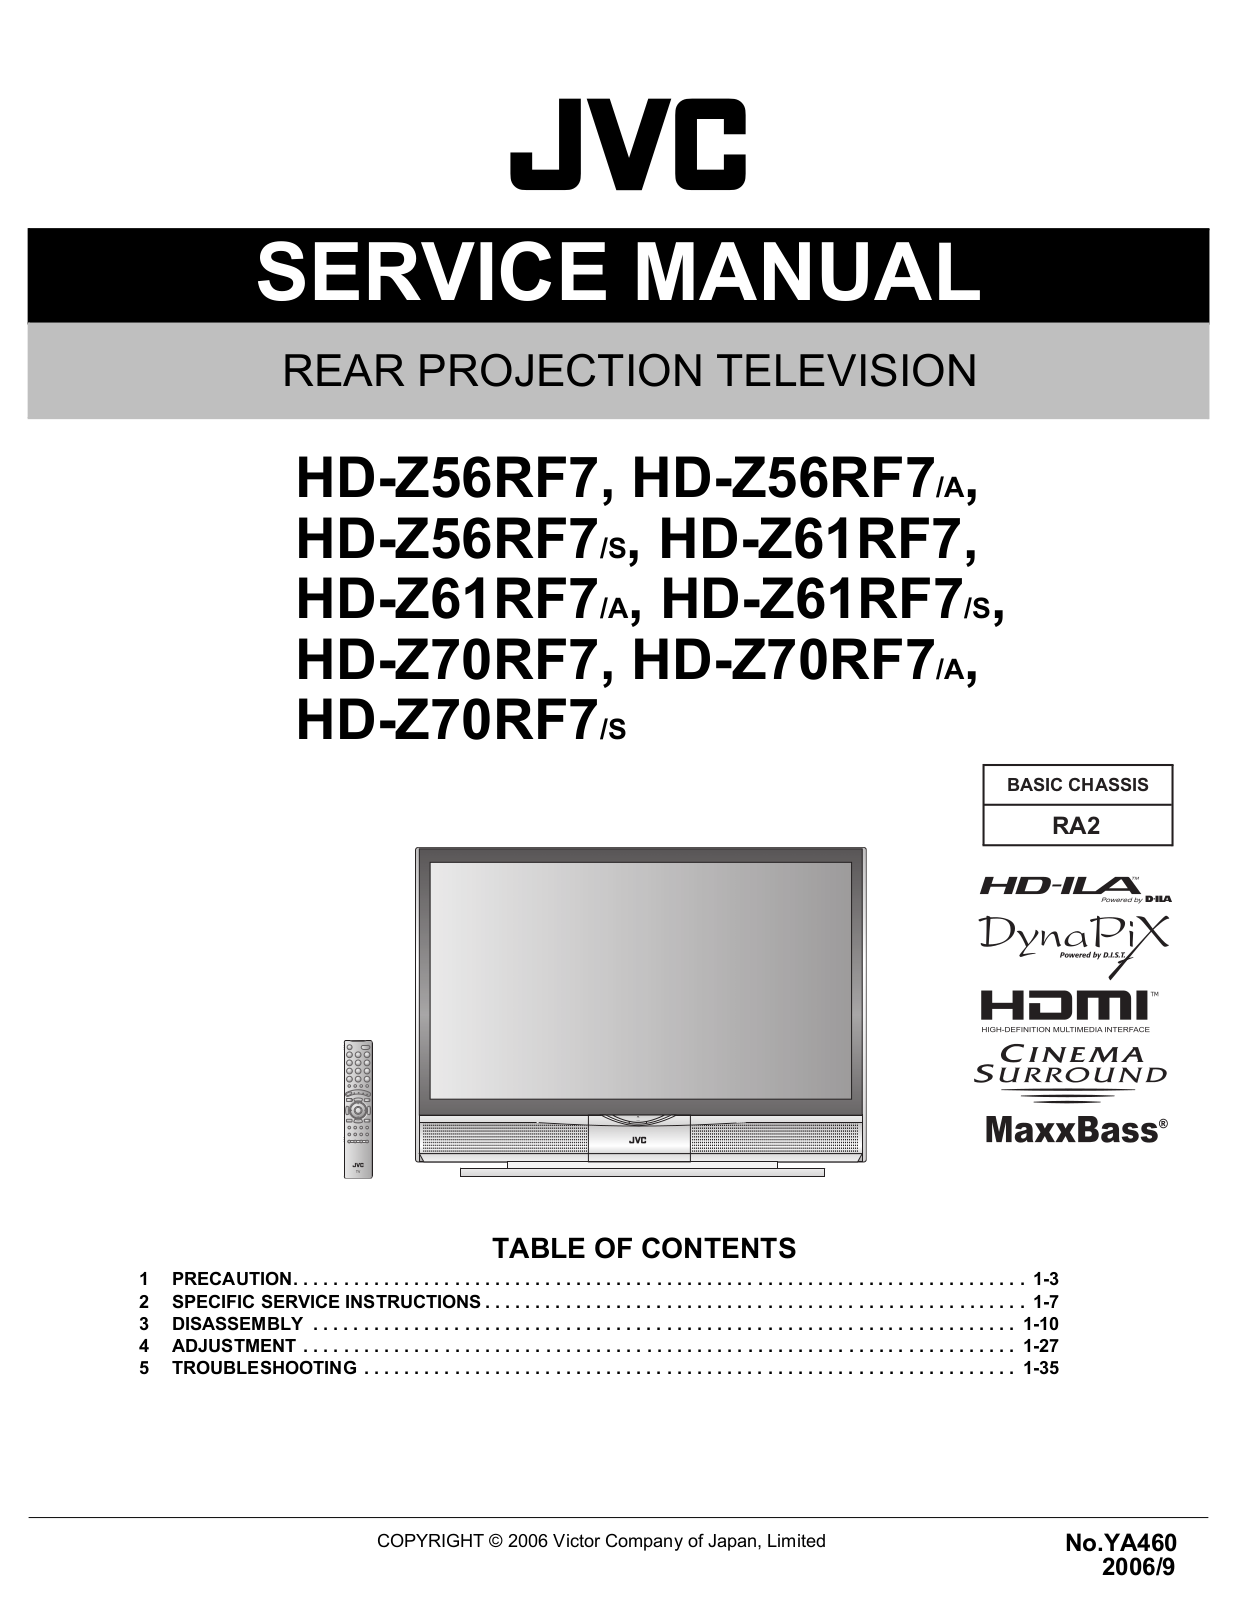 JVC HD-Z56RF7, HD-Z56RF7-A, HD-Z56RF7-S, HD-Z61RF7, HD-Z61RF7-A Service Manual